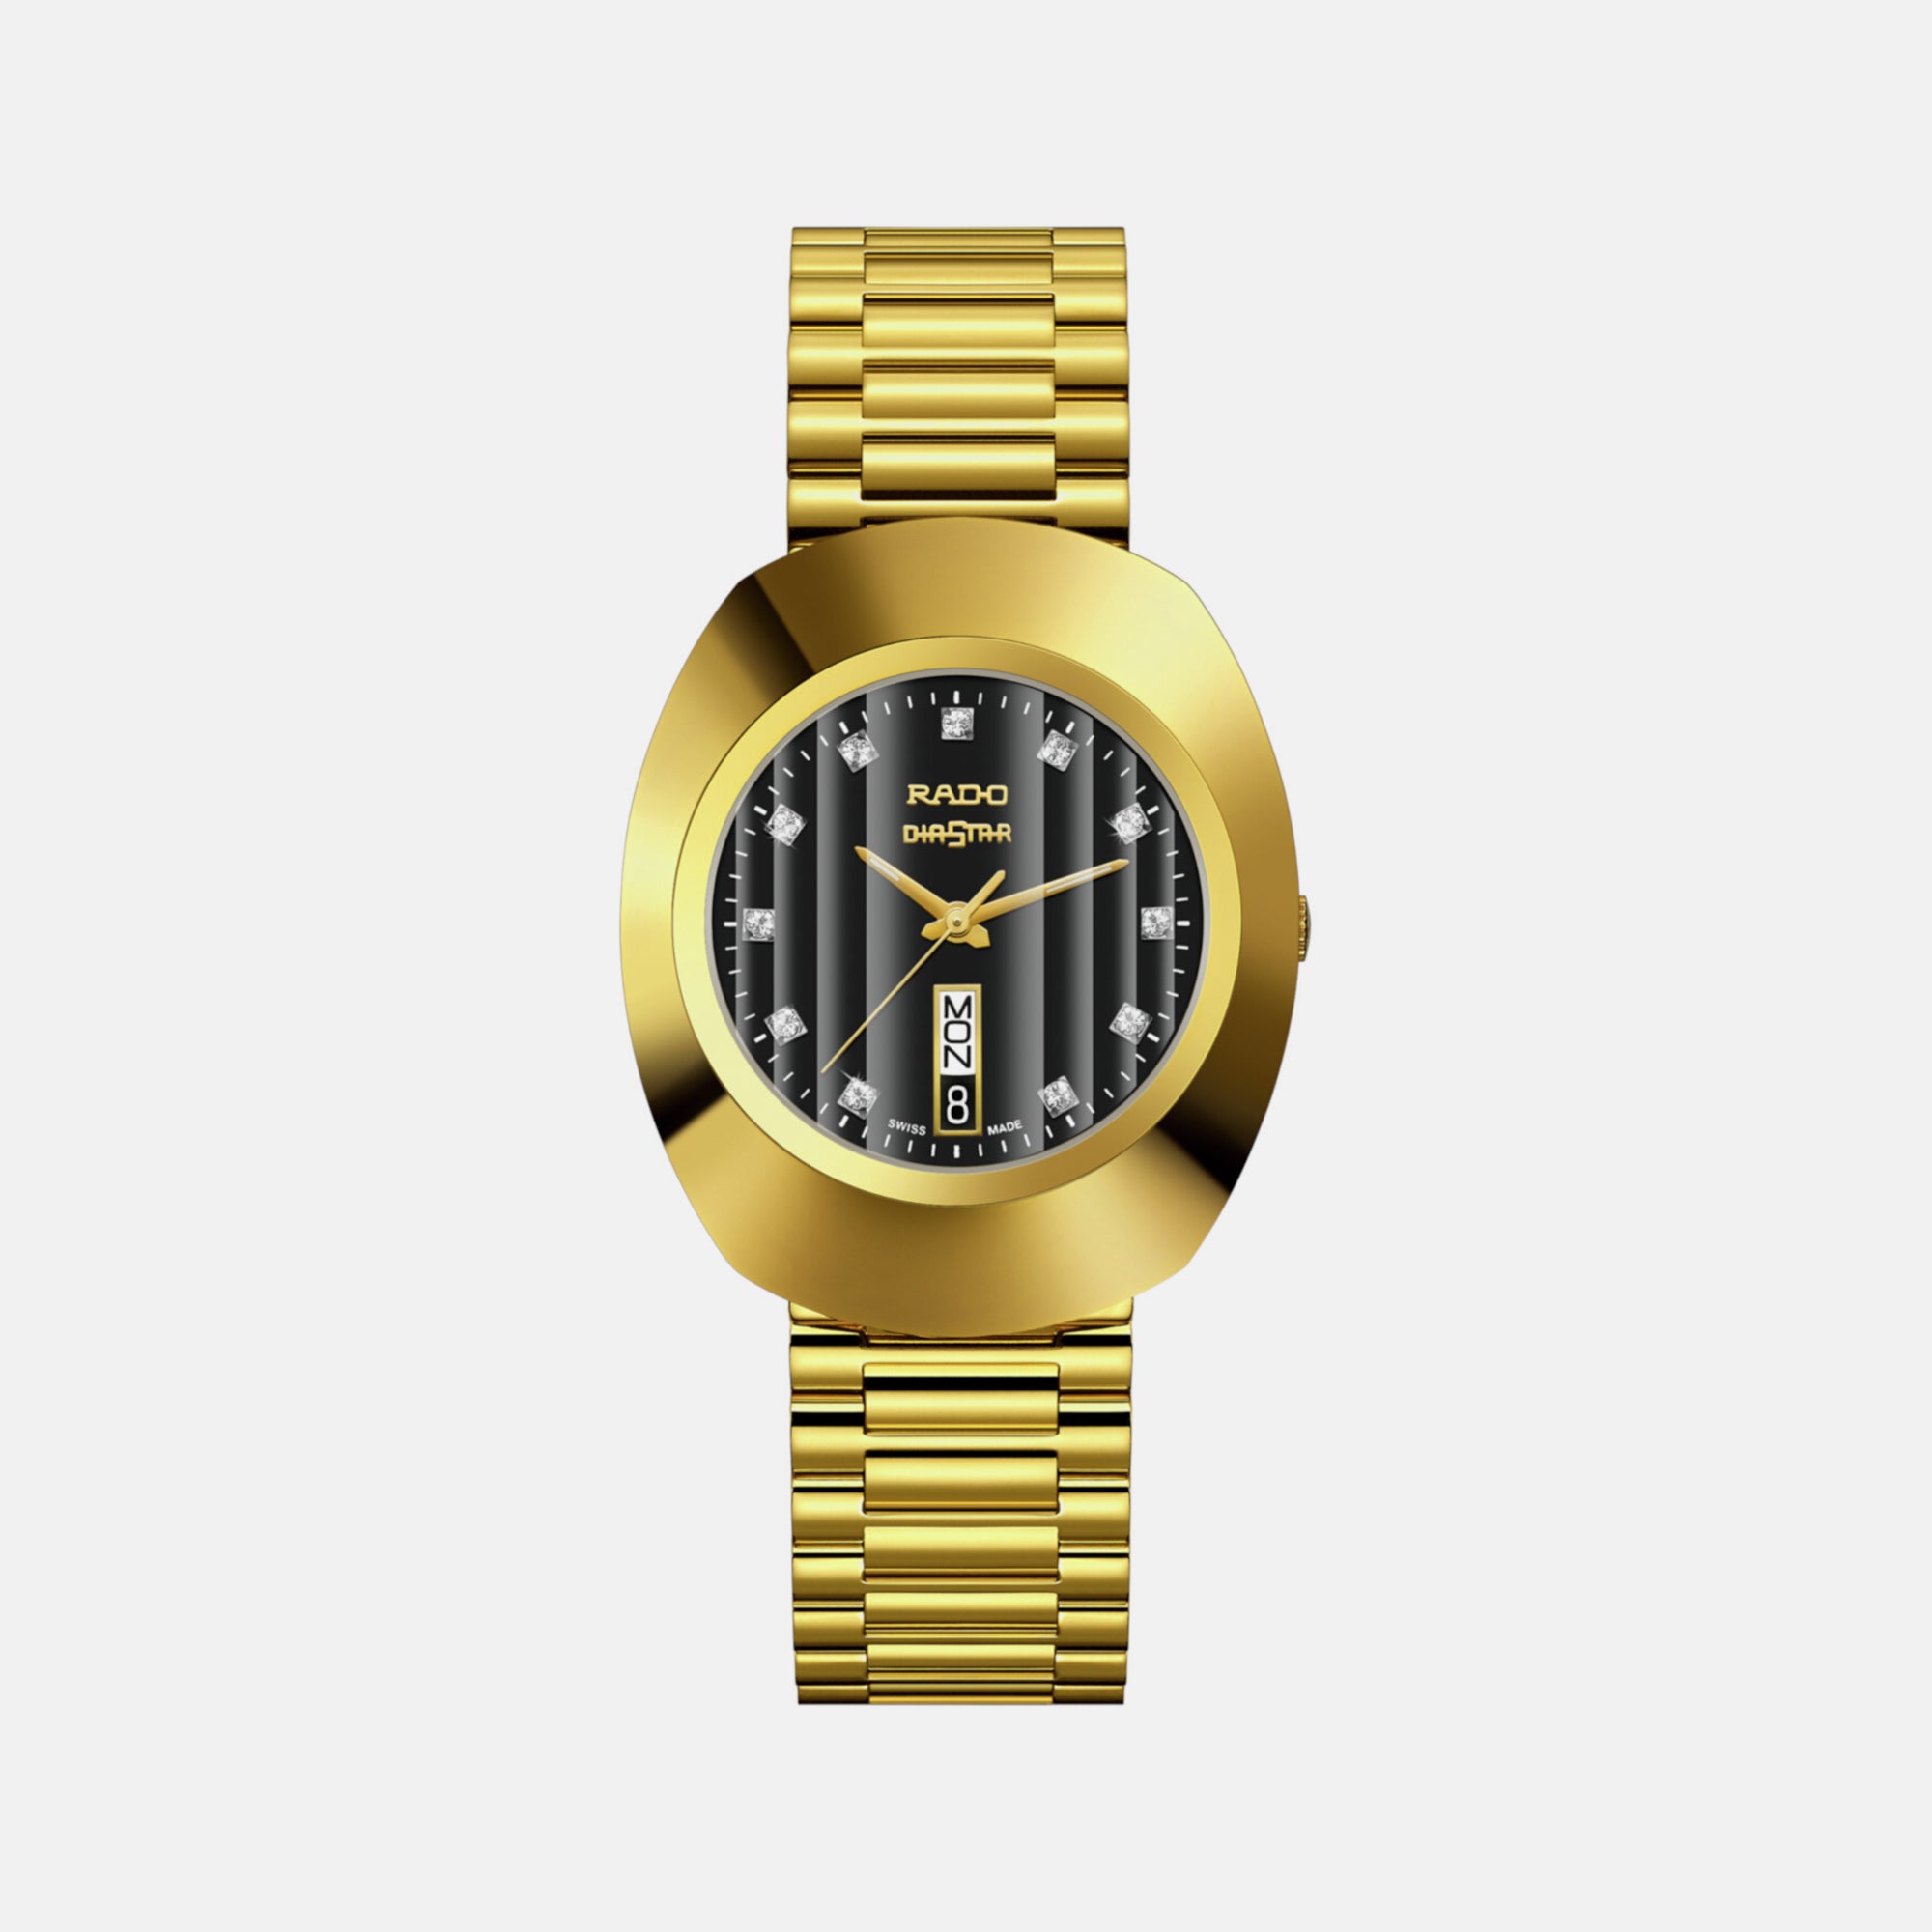 Genuine RADO 18mm Bracelet Gold-plated Watch Bracelet Rado03 01750  Expandable | eBay